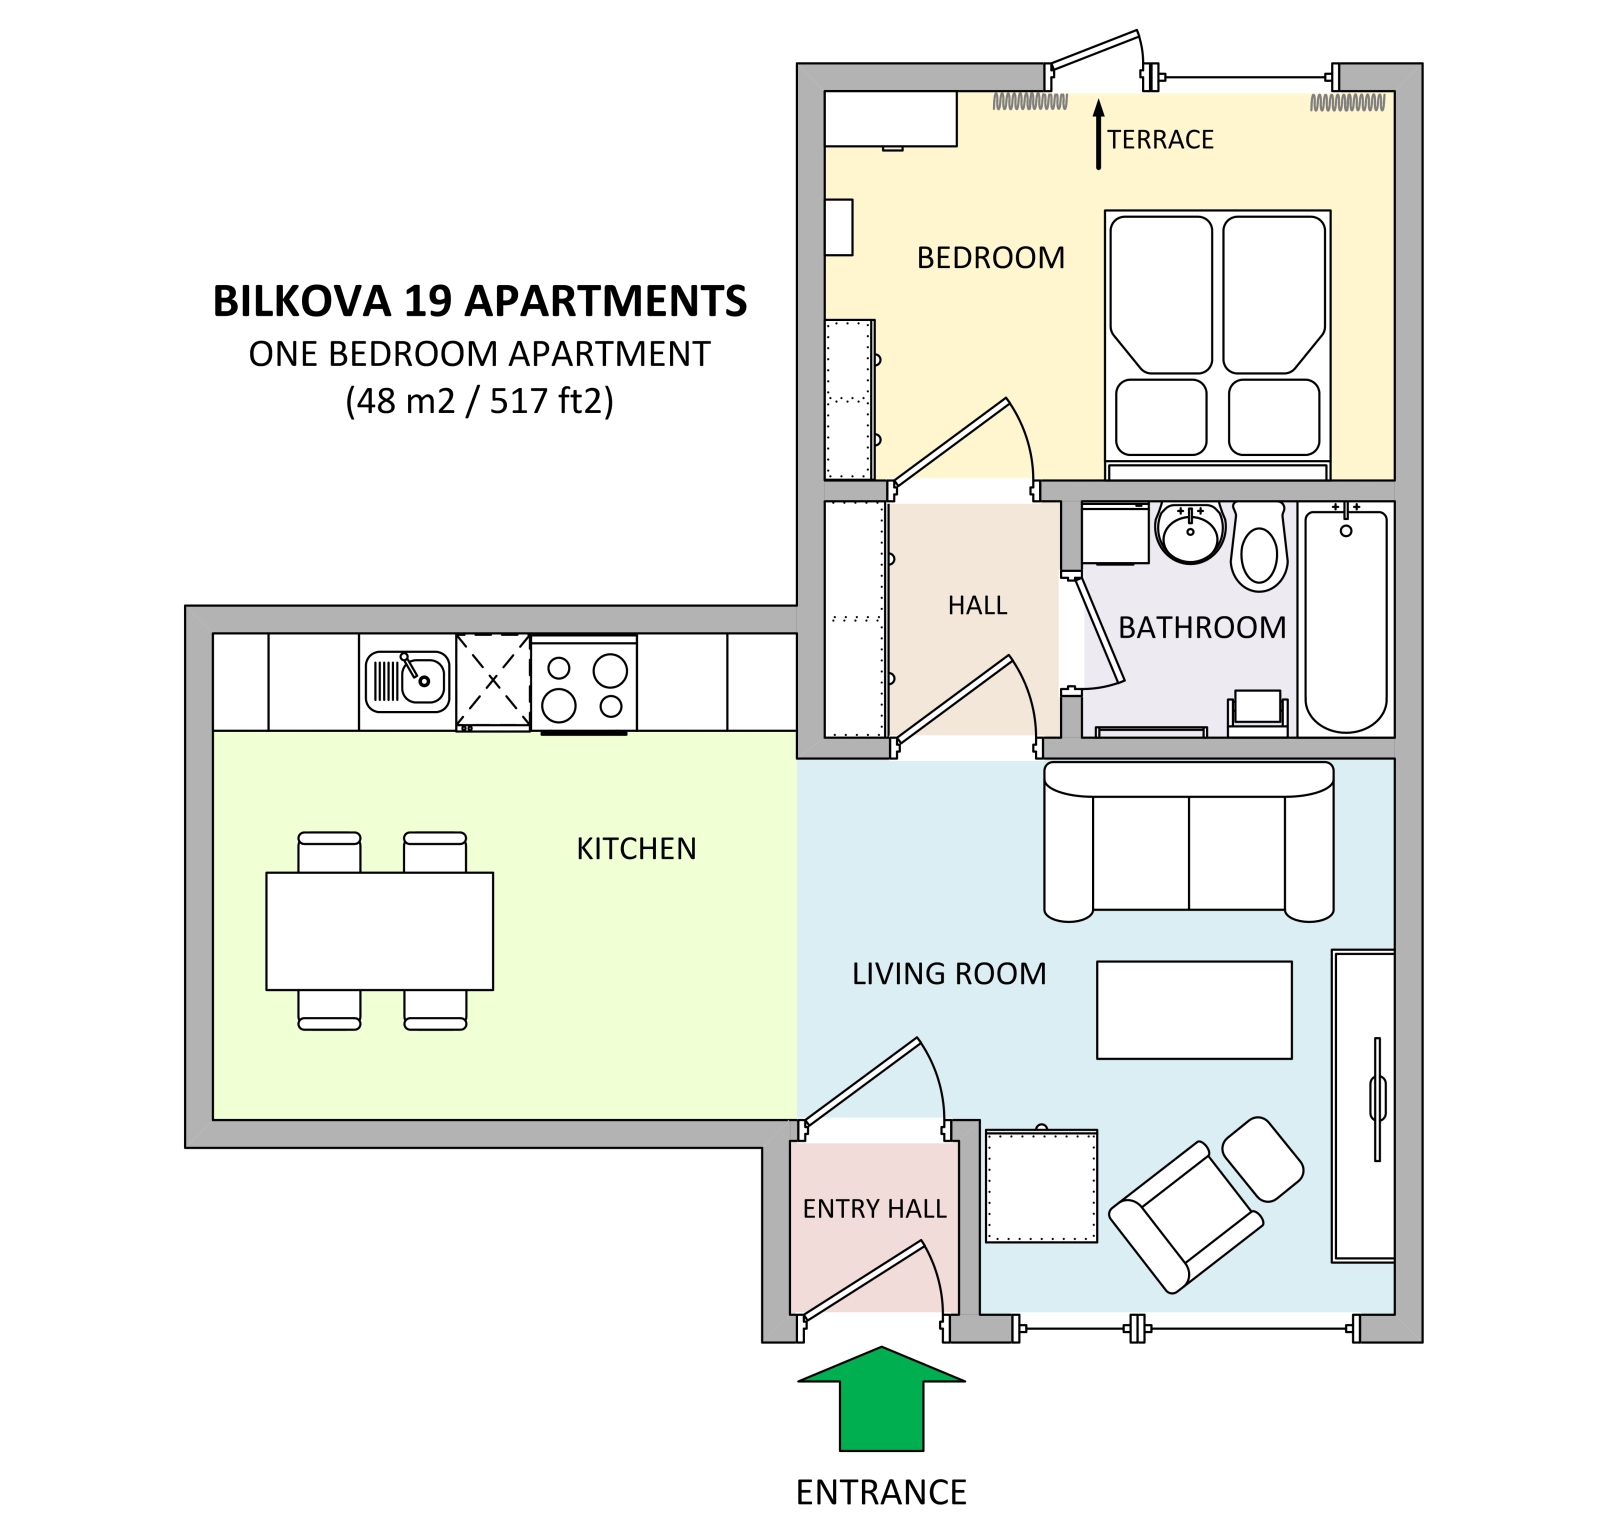 Floorplan of apartment 11 in Apartments Bilkova 19 residence in Prague